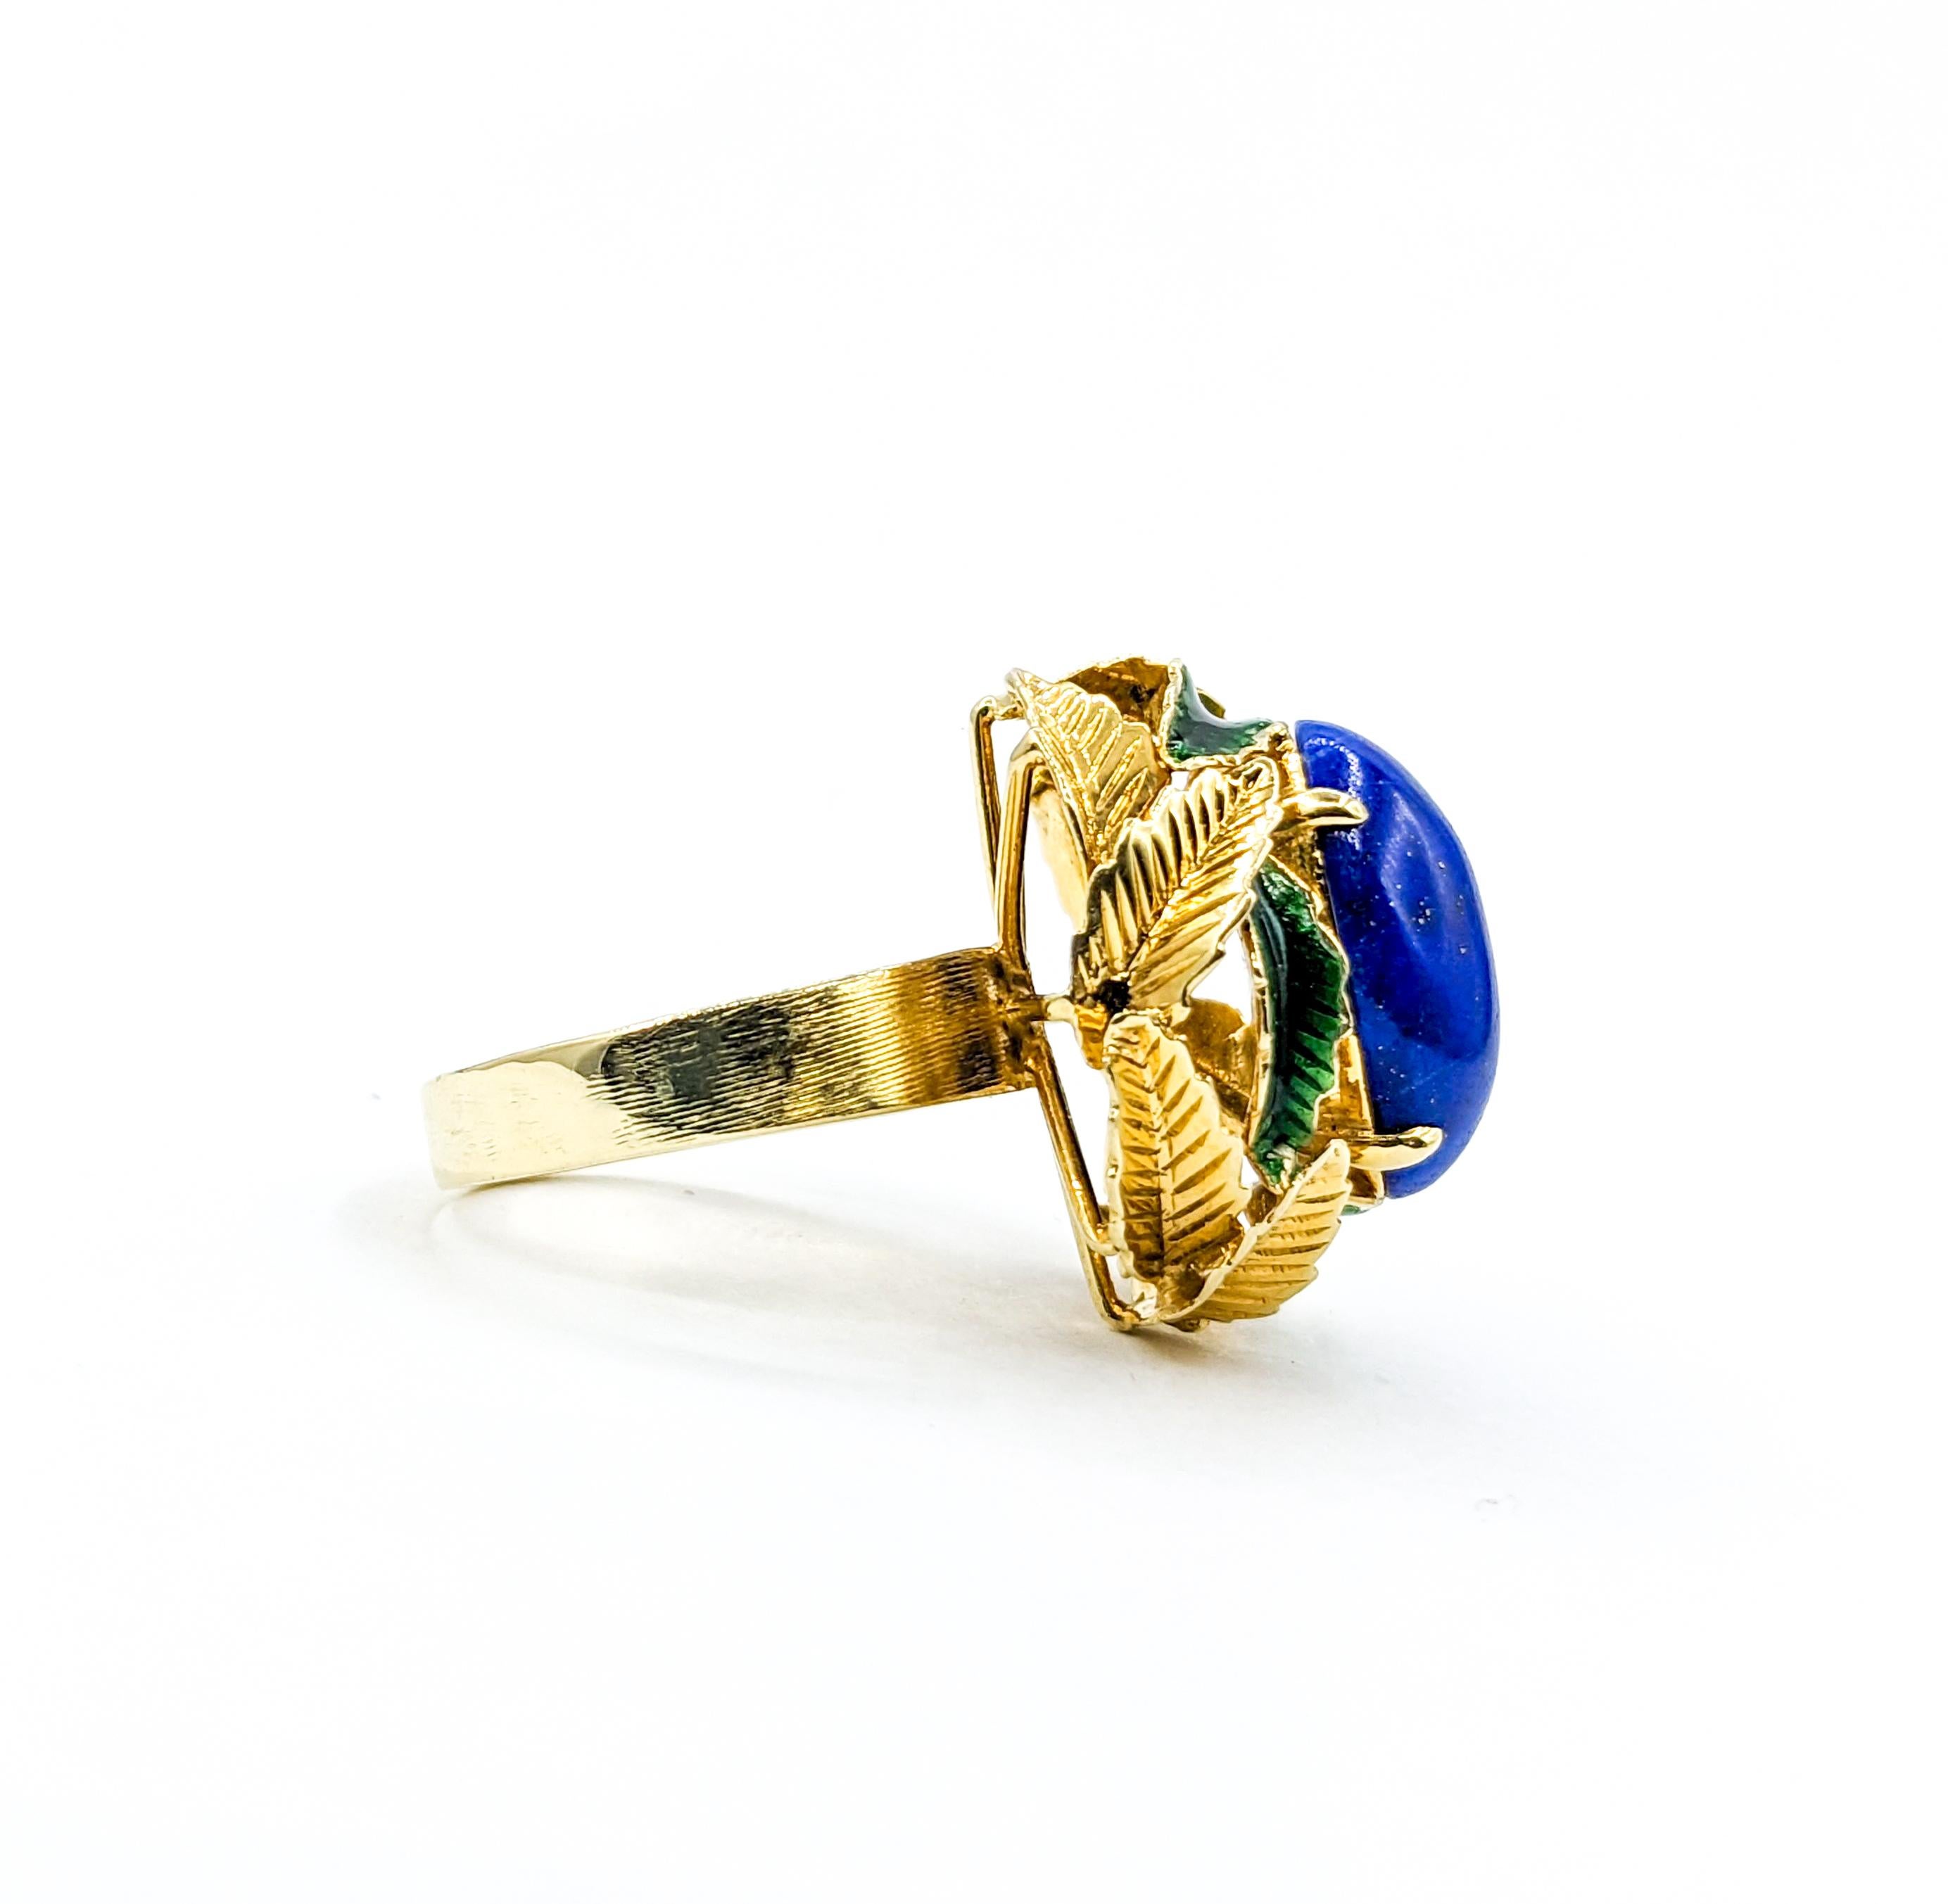  Lapis Cabochon Ring with Enamel Leaf Details For Sale 1